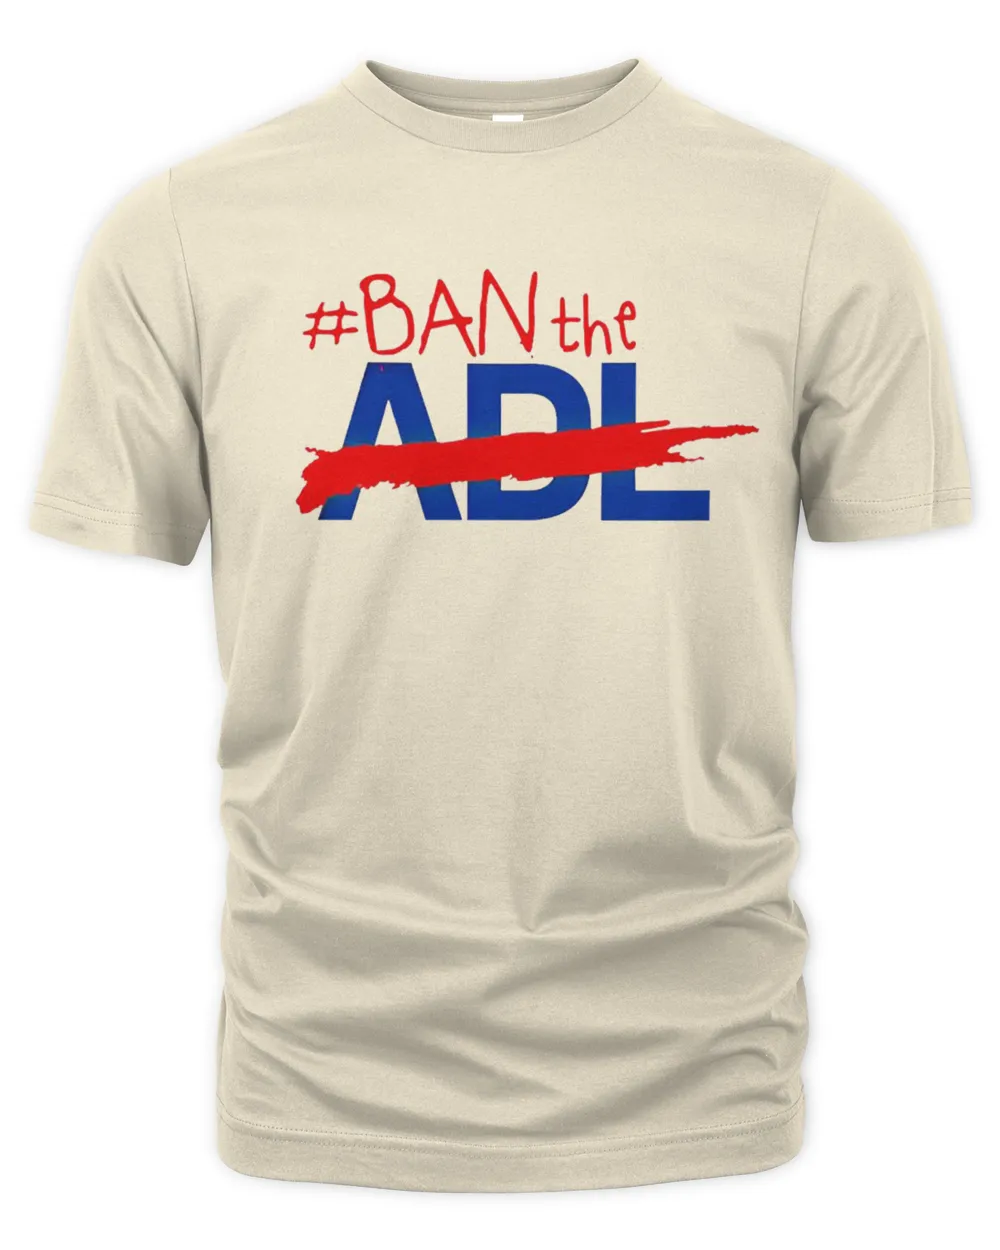 Banthe the ADL Shirt